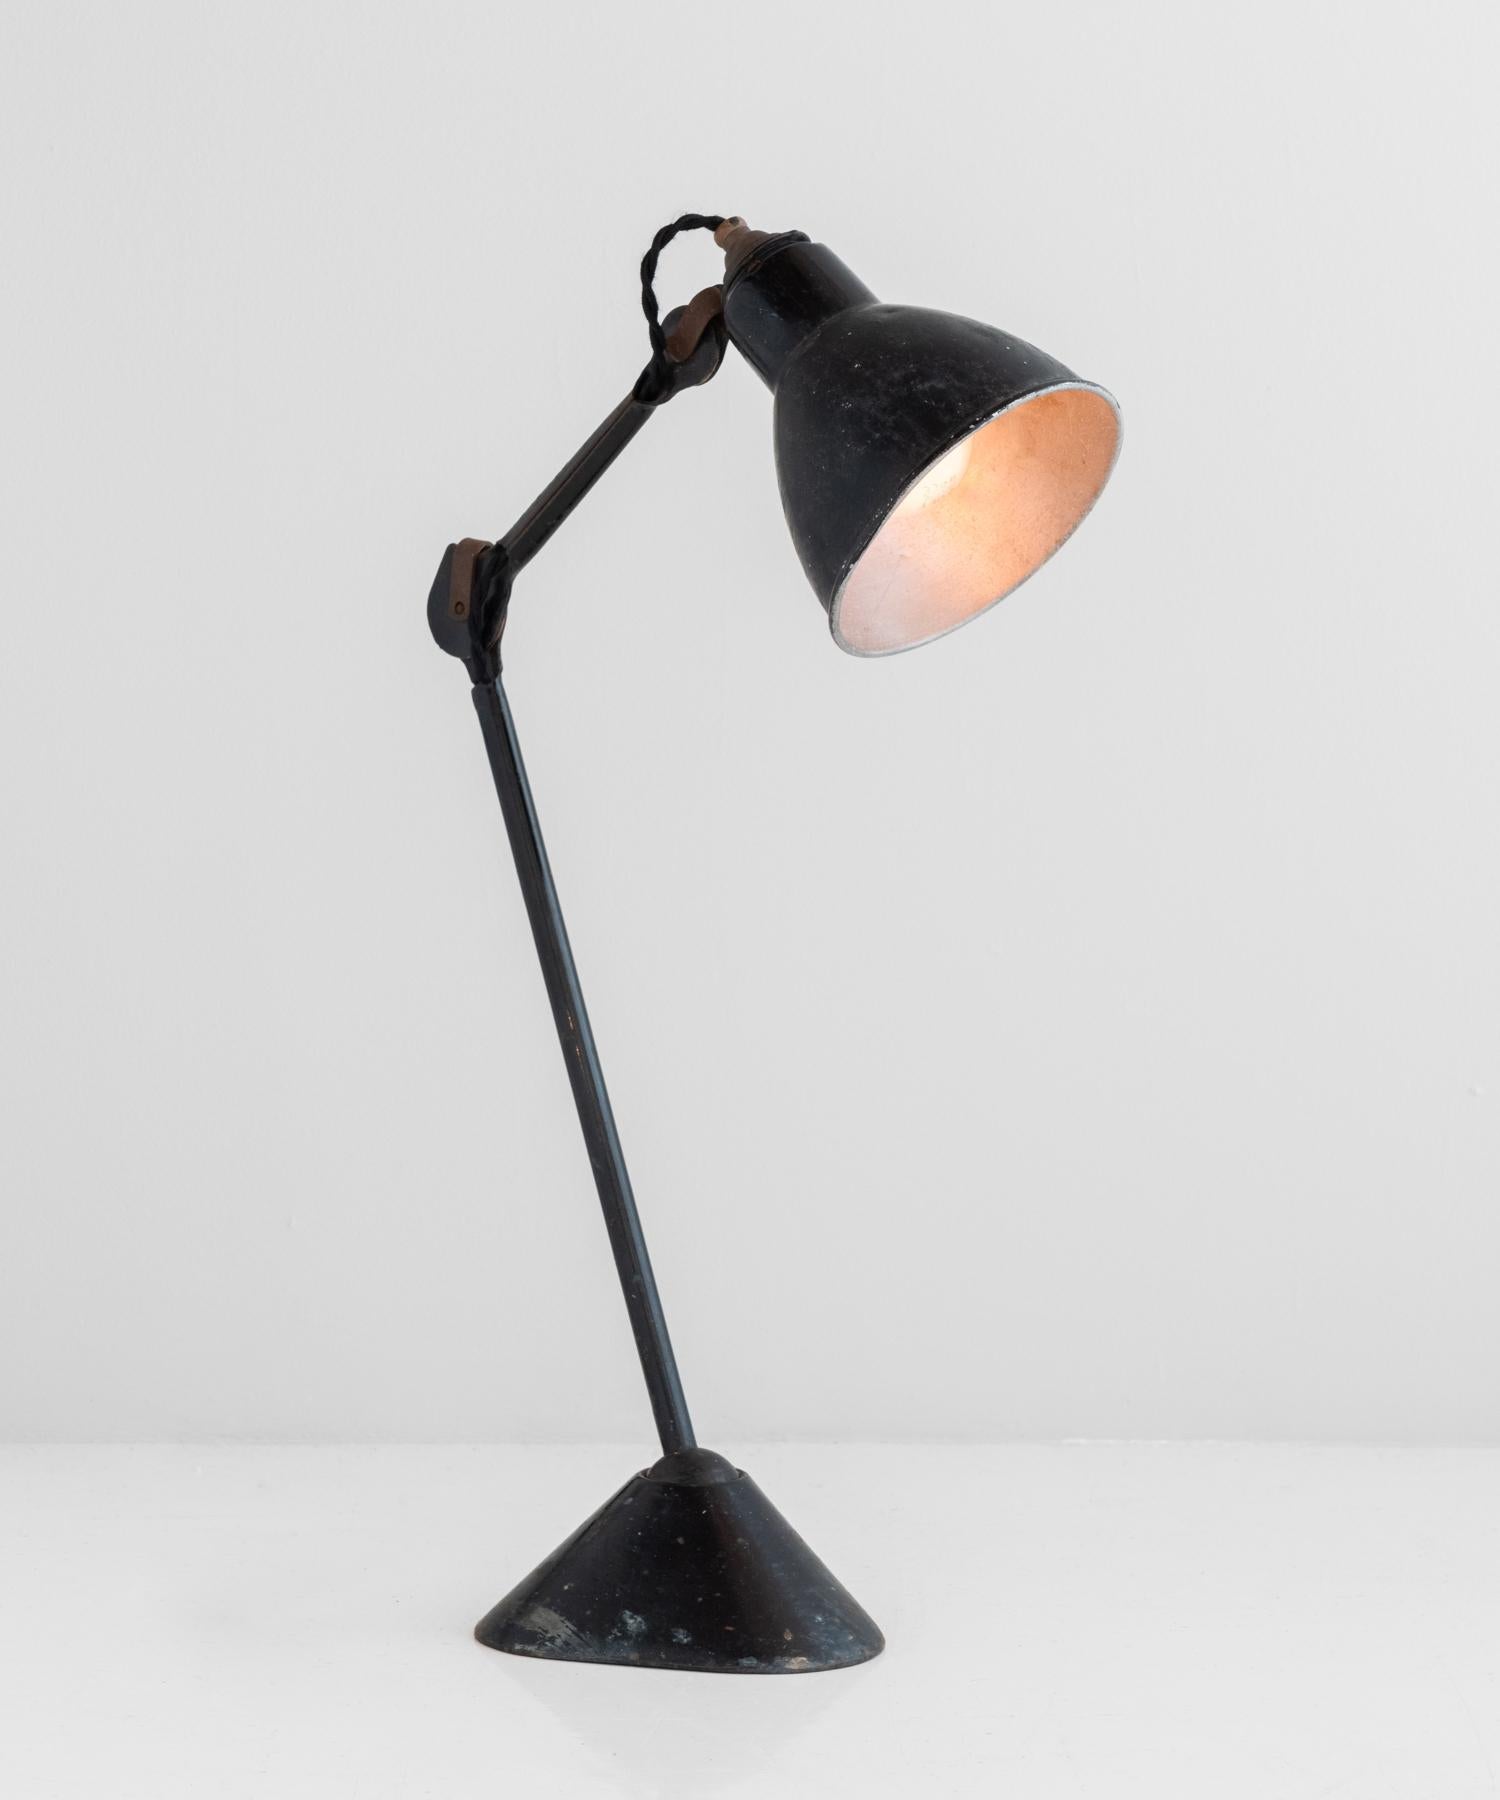 Gras table lamp, France, circa 1930

Designed by Bernard-Albin Gras, with original black patina and iron base.